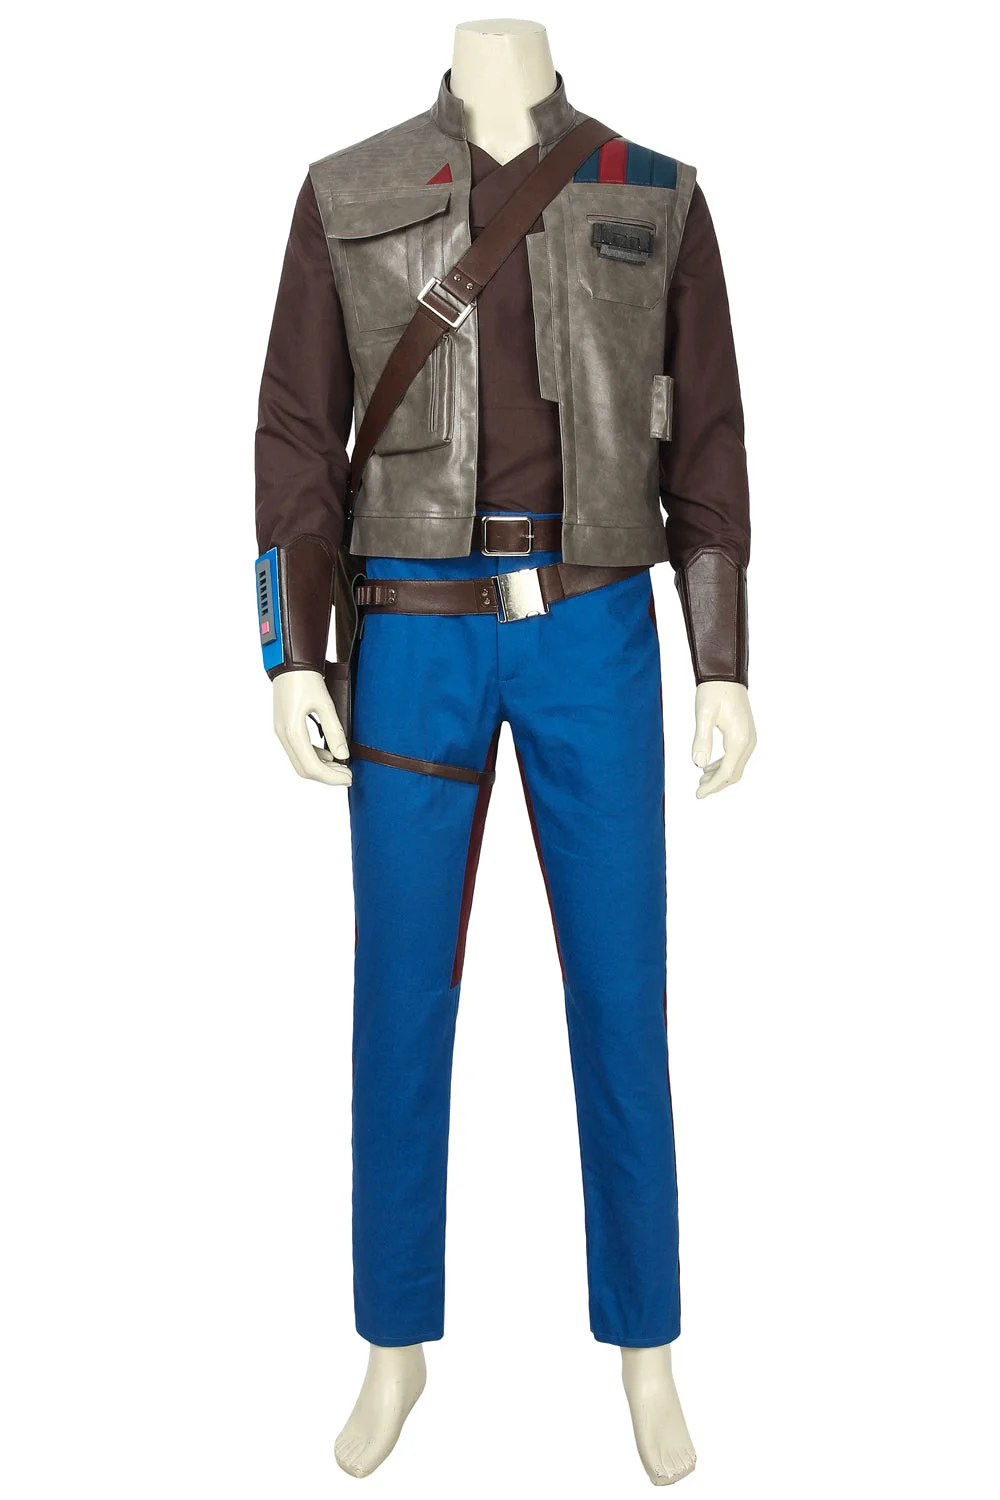 SW The Rise of Skywalker Finn Cosplay Costume